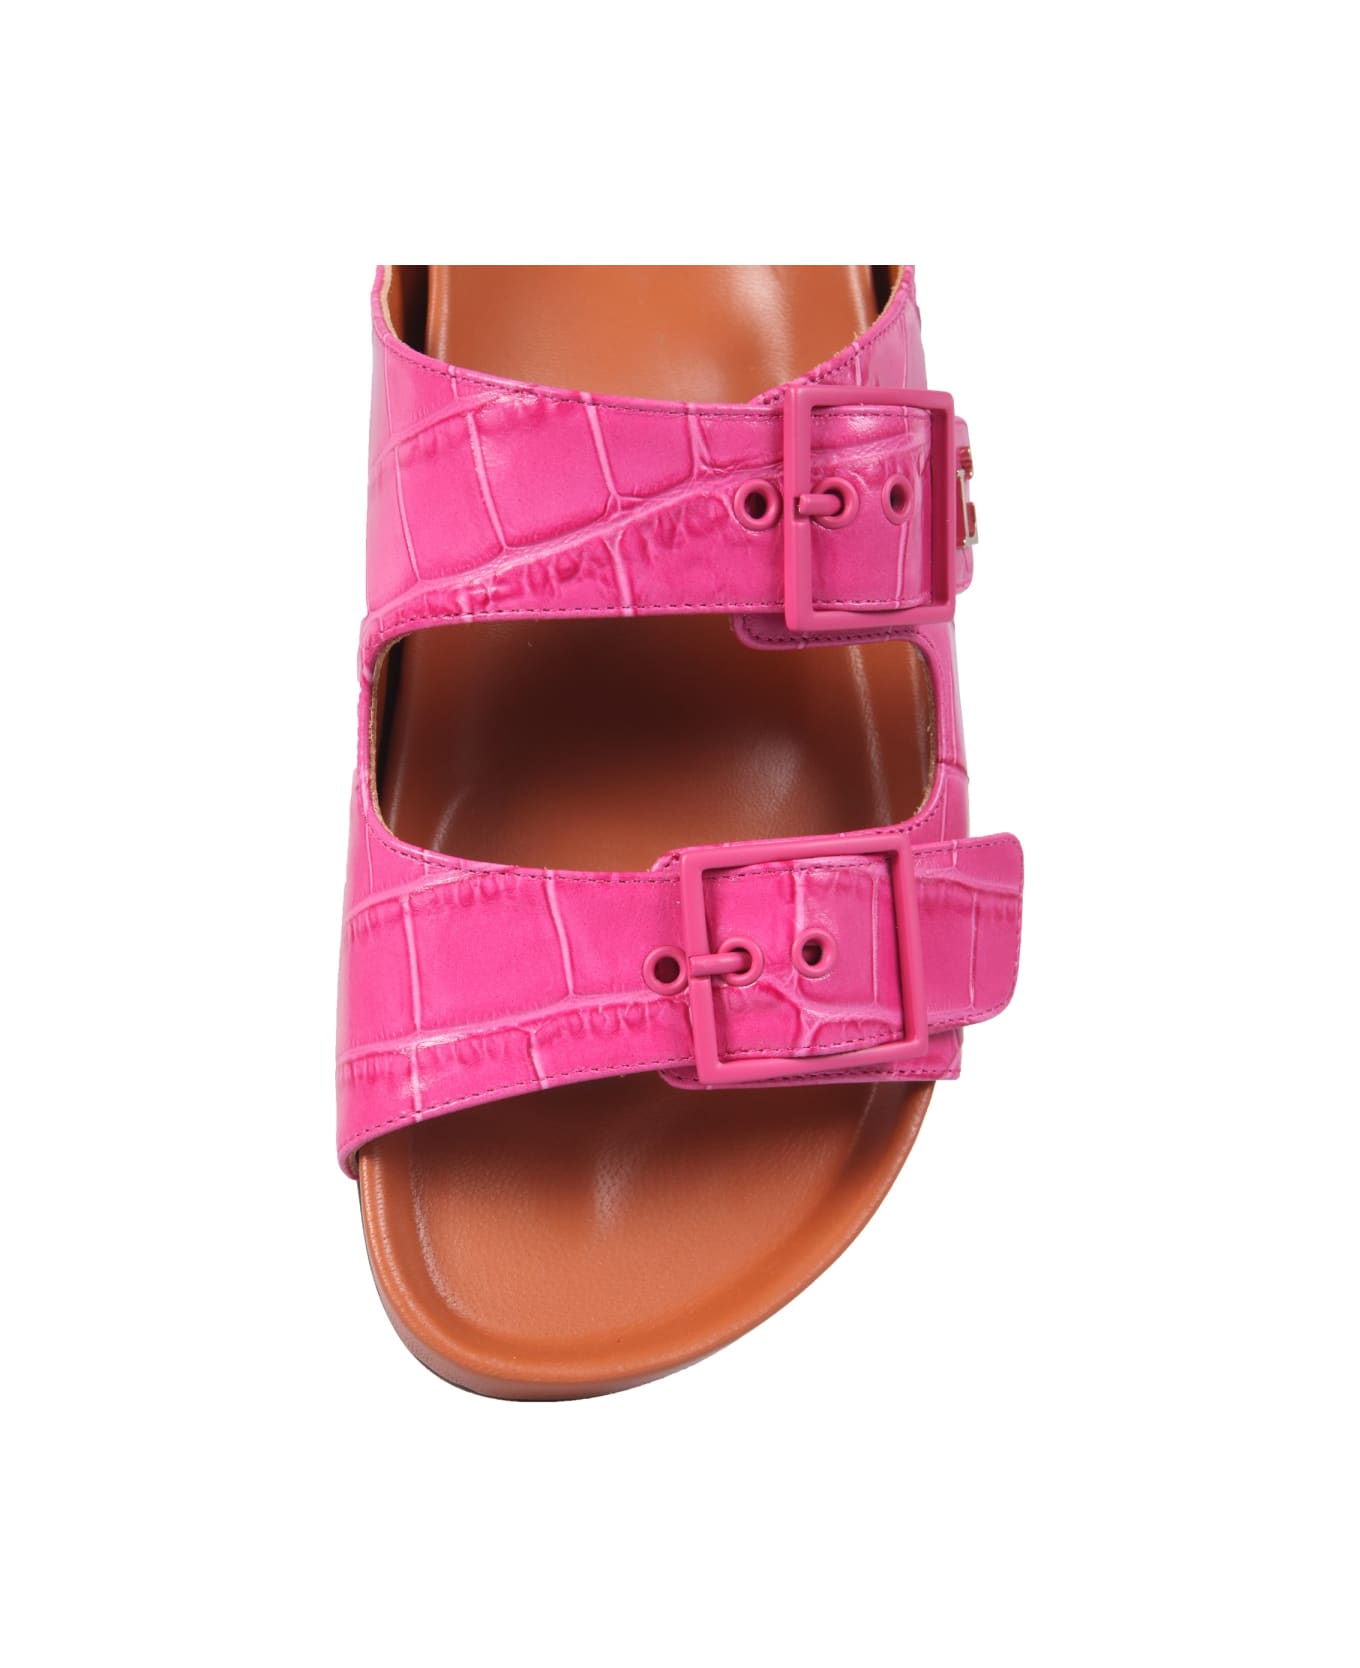 L'Autre Chose Sandals With Coconut Print Leather - FUCHSIA